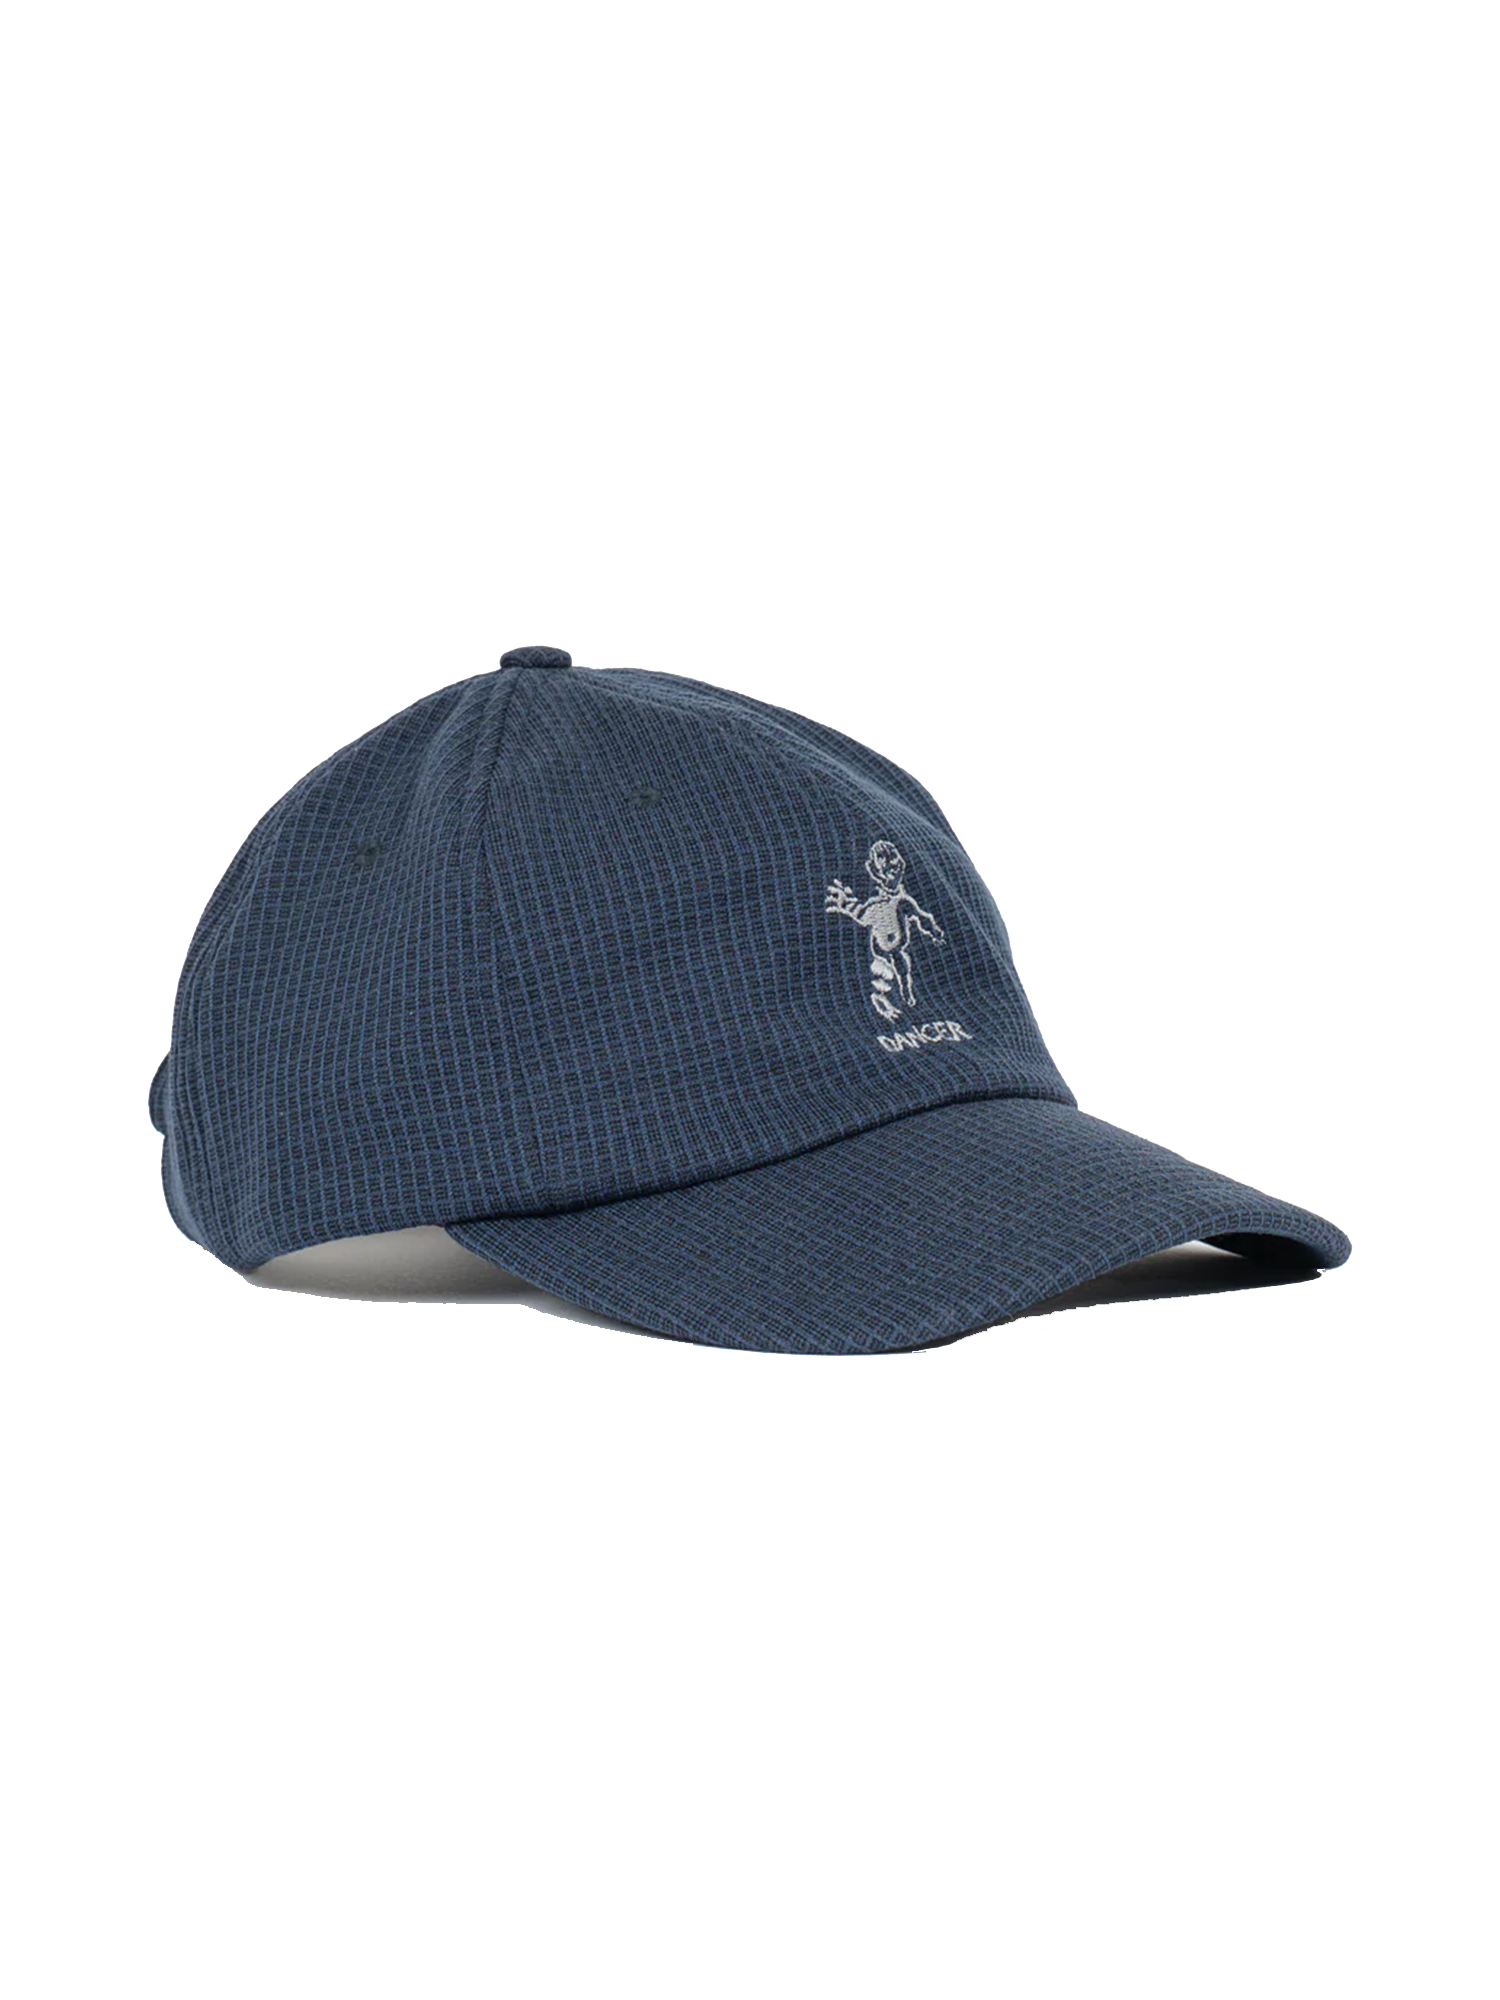 Dancer - Hats - OG Logo - Fleece Cap - Navy